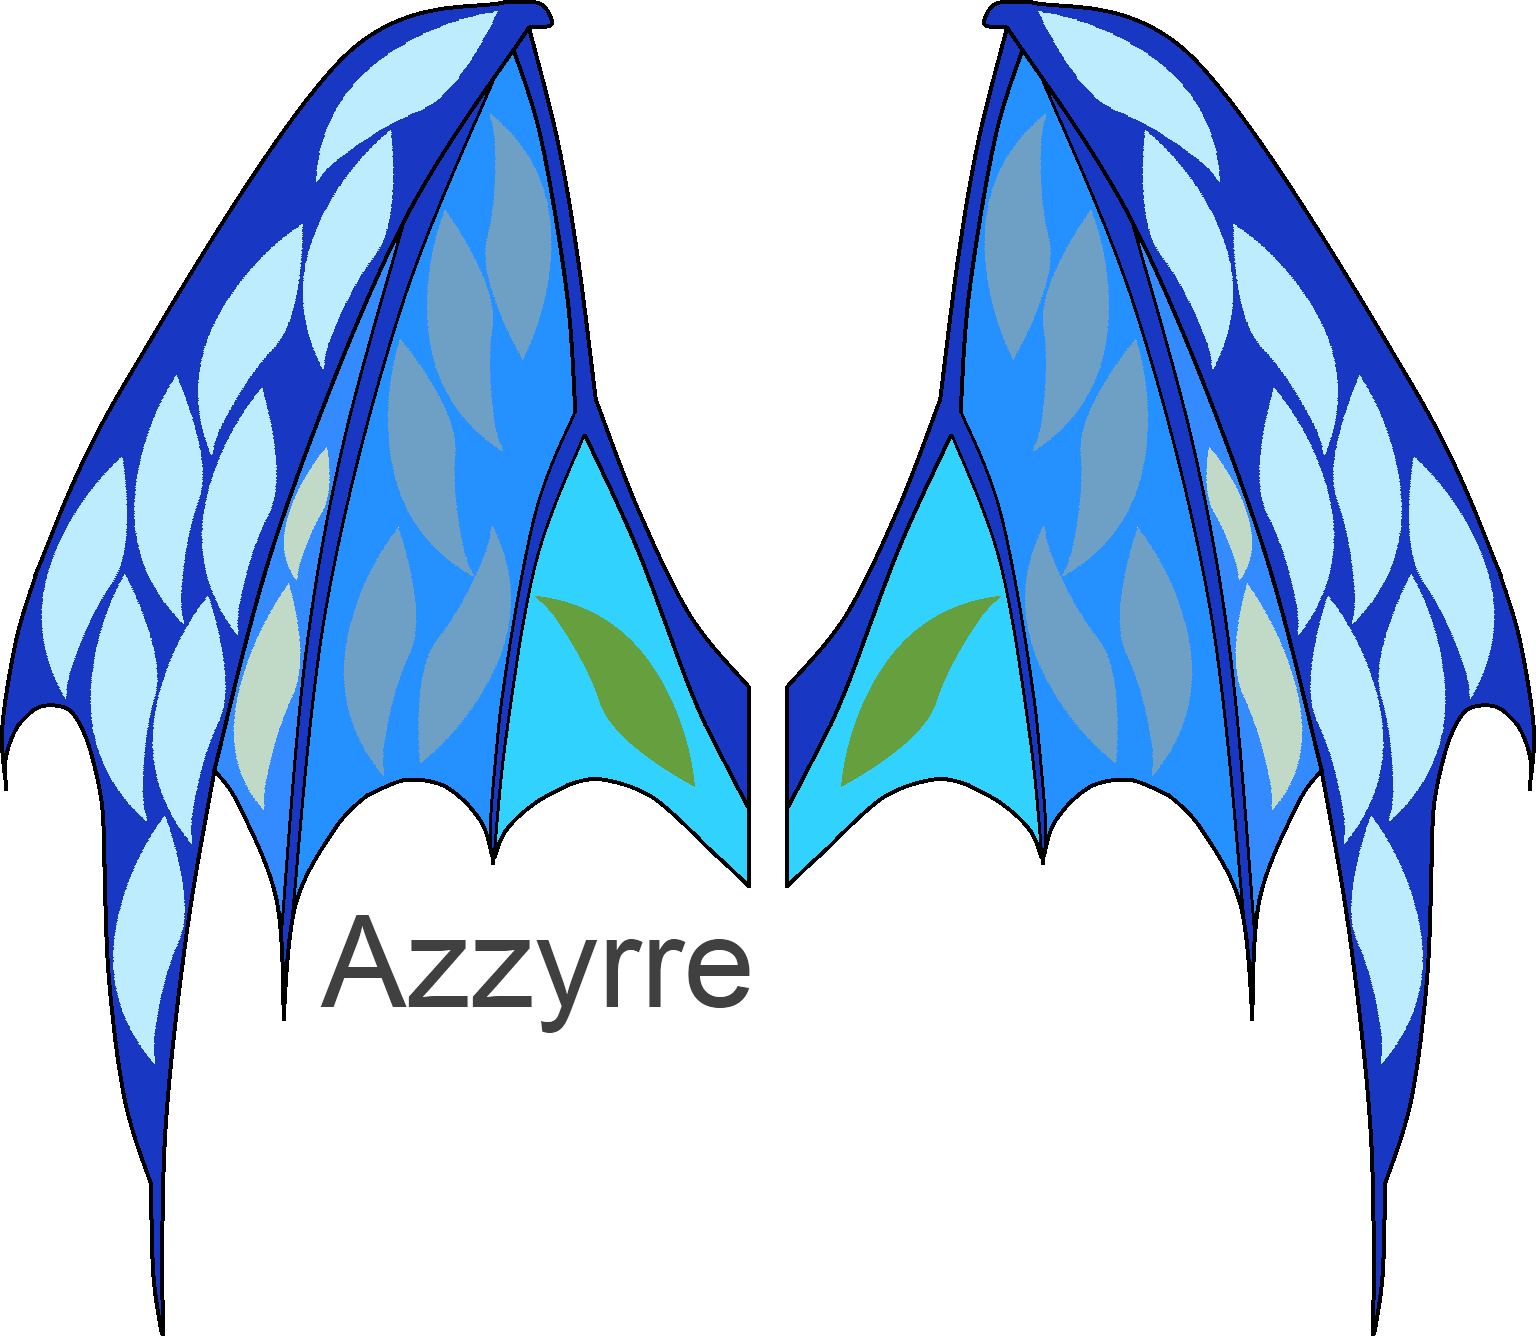 Schmoe42 Dragon Wings By Nickanater1 - Windows 7 (1536x1336)